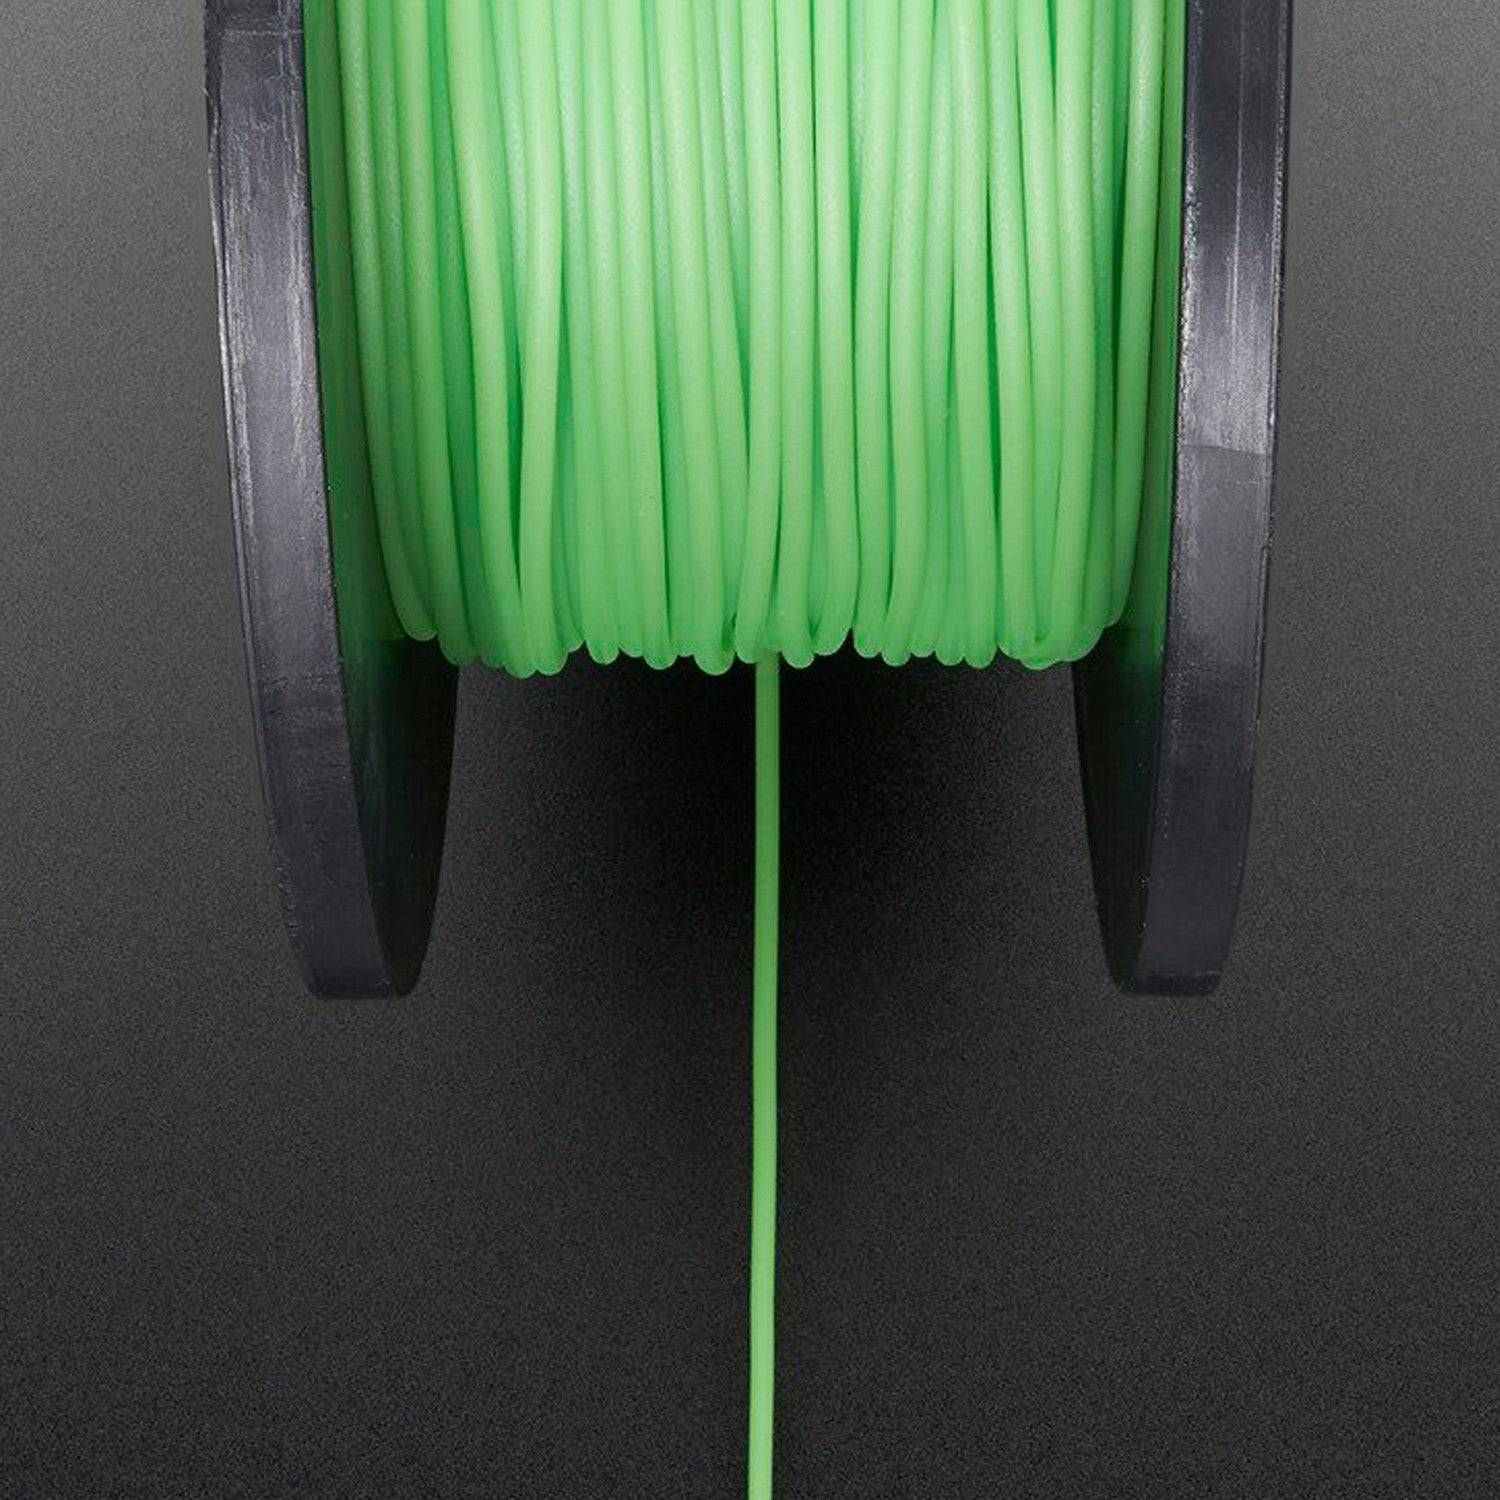 1 KG 1.75mm Luminous Green 3D Printer ABS Filament For 3D Printer - RS795 - REES52